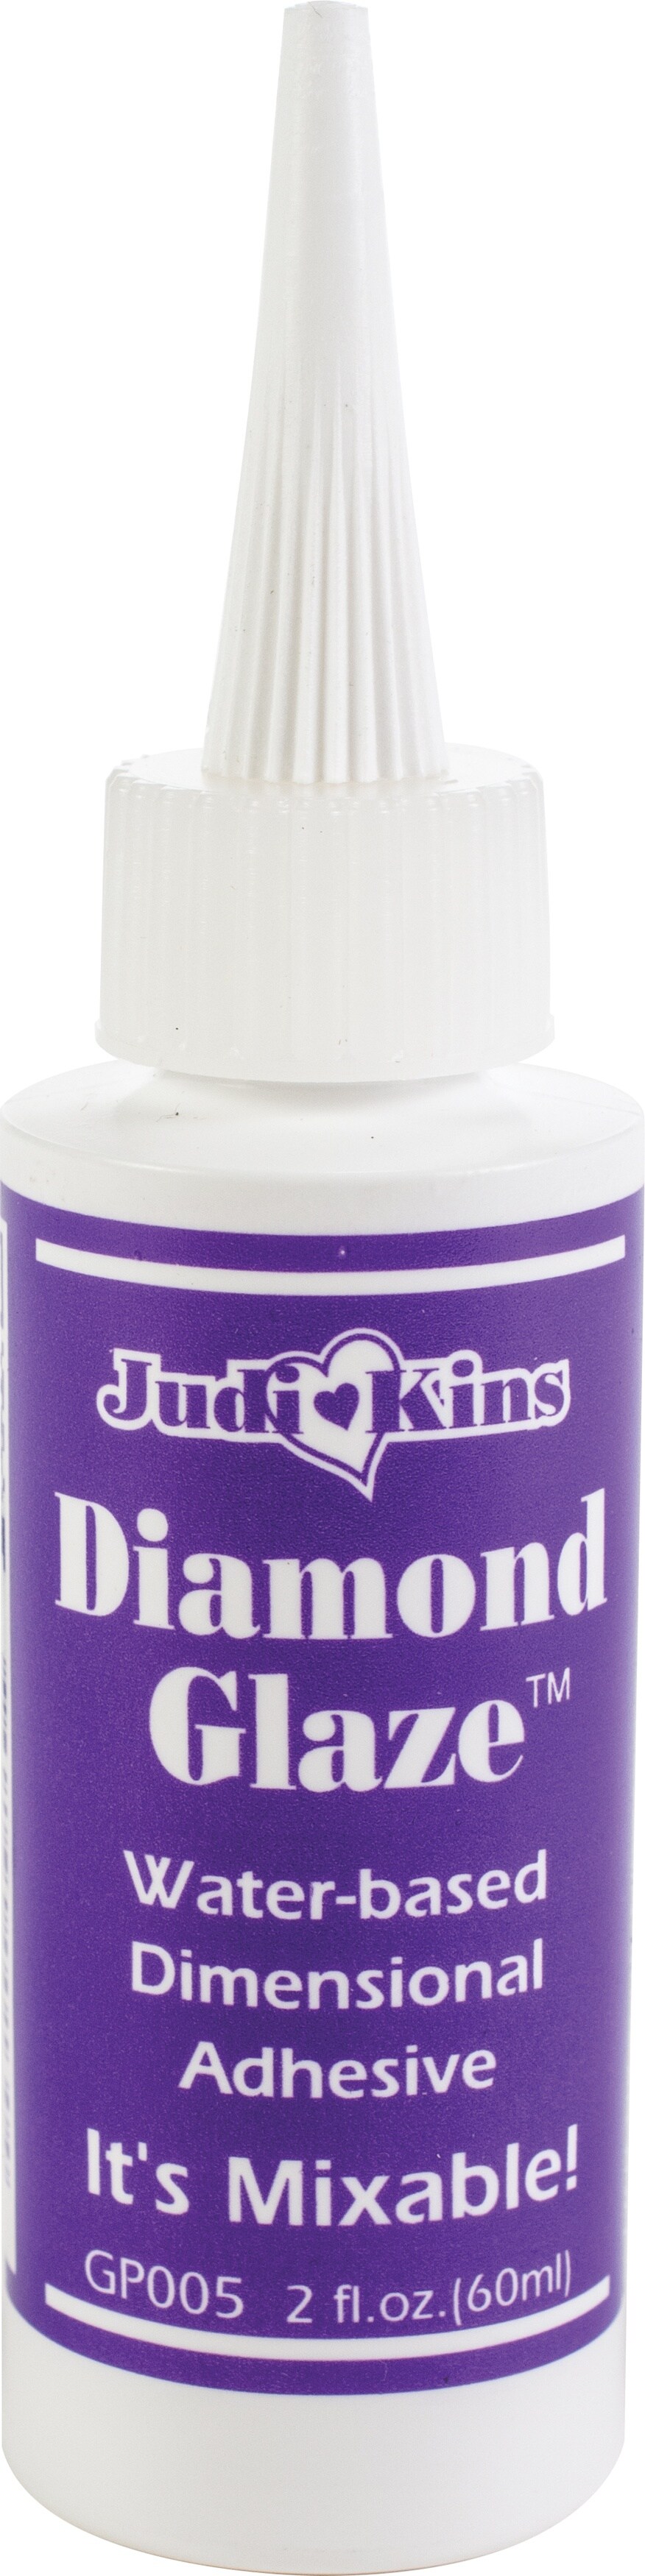 Judikins Diamond Glaze Dimensional Adhesive 2oz-Precision Tip